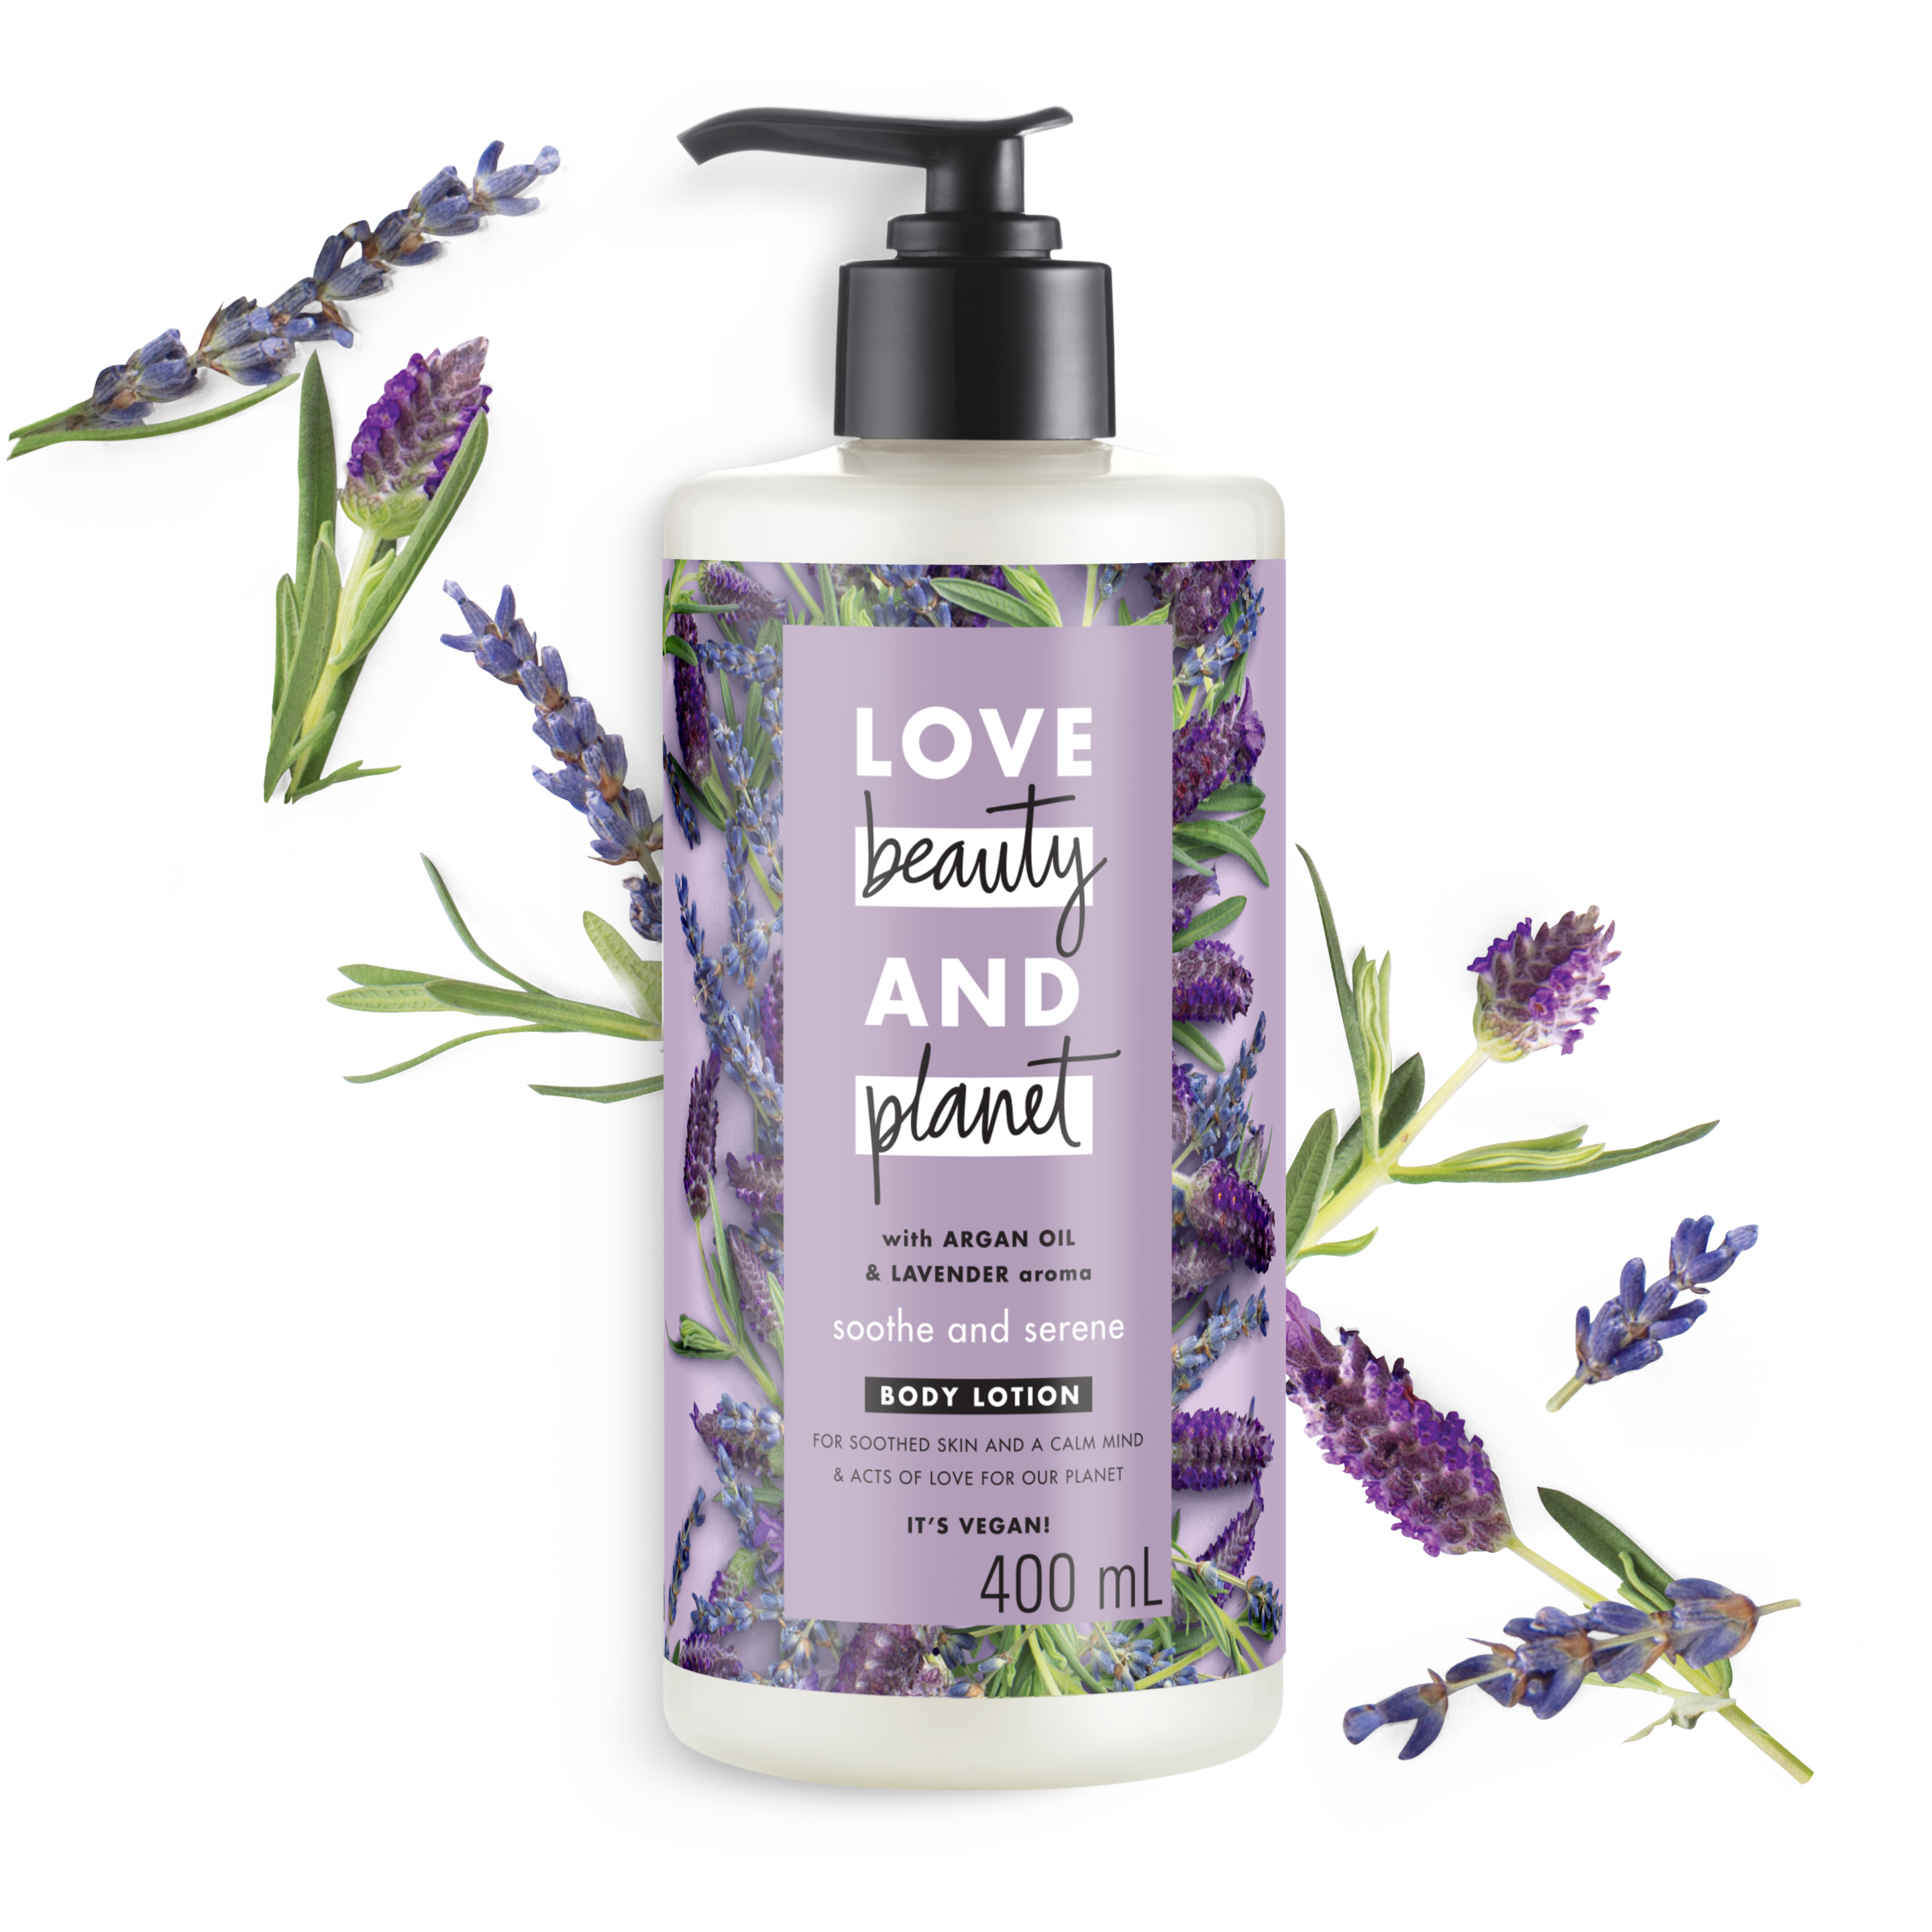 Tampak depan kemasan Love Beauty and Planet Argan Oil & Lavender Body Lotion ukuran 400 ml Text